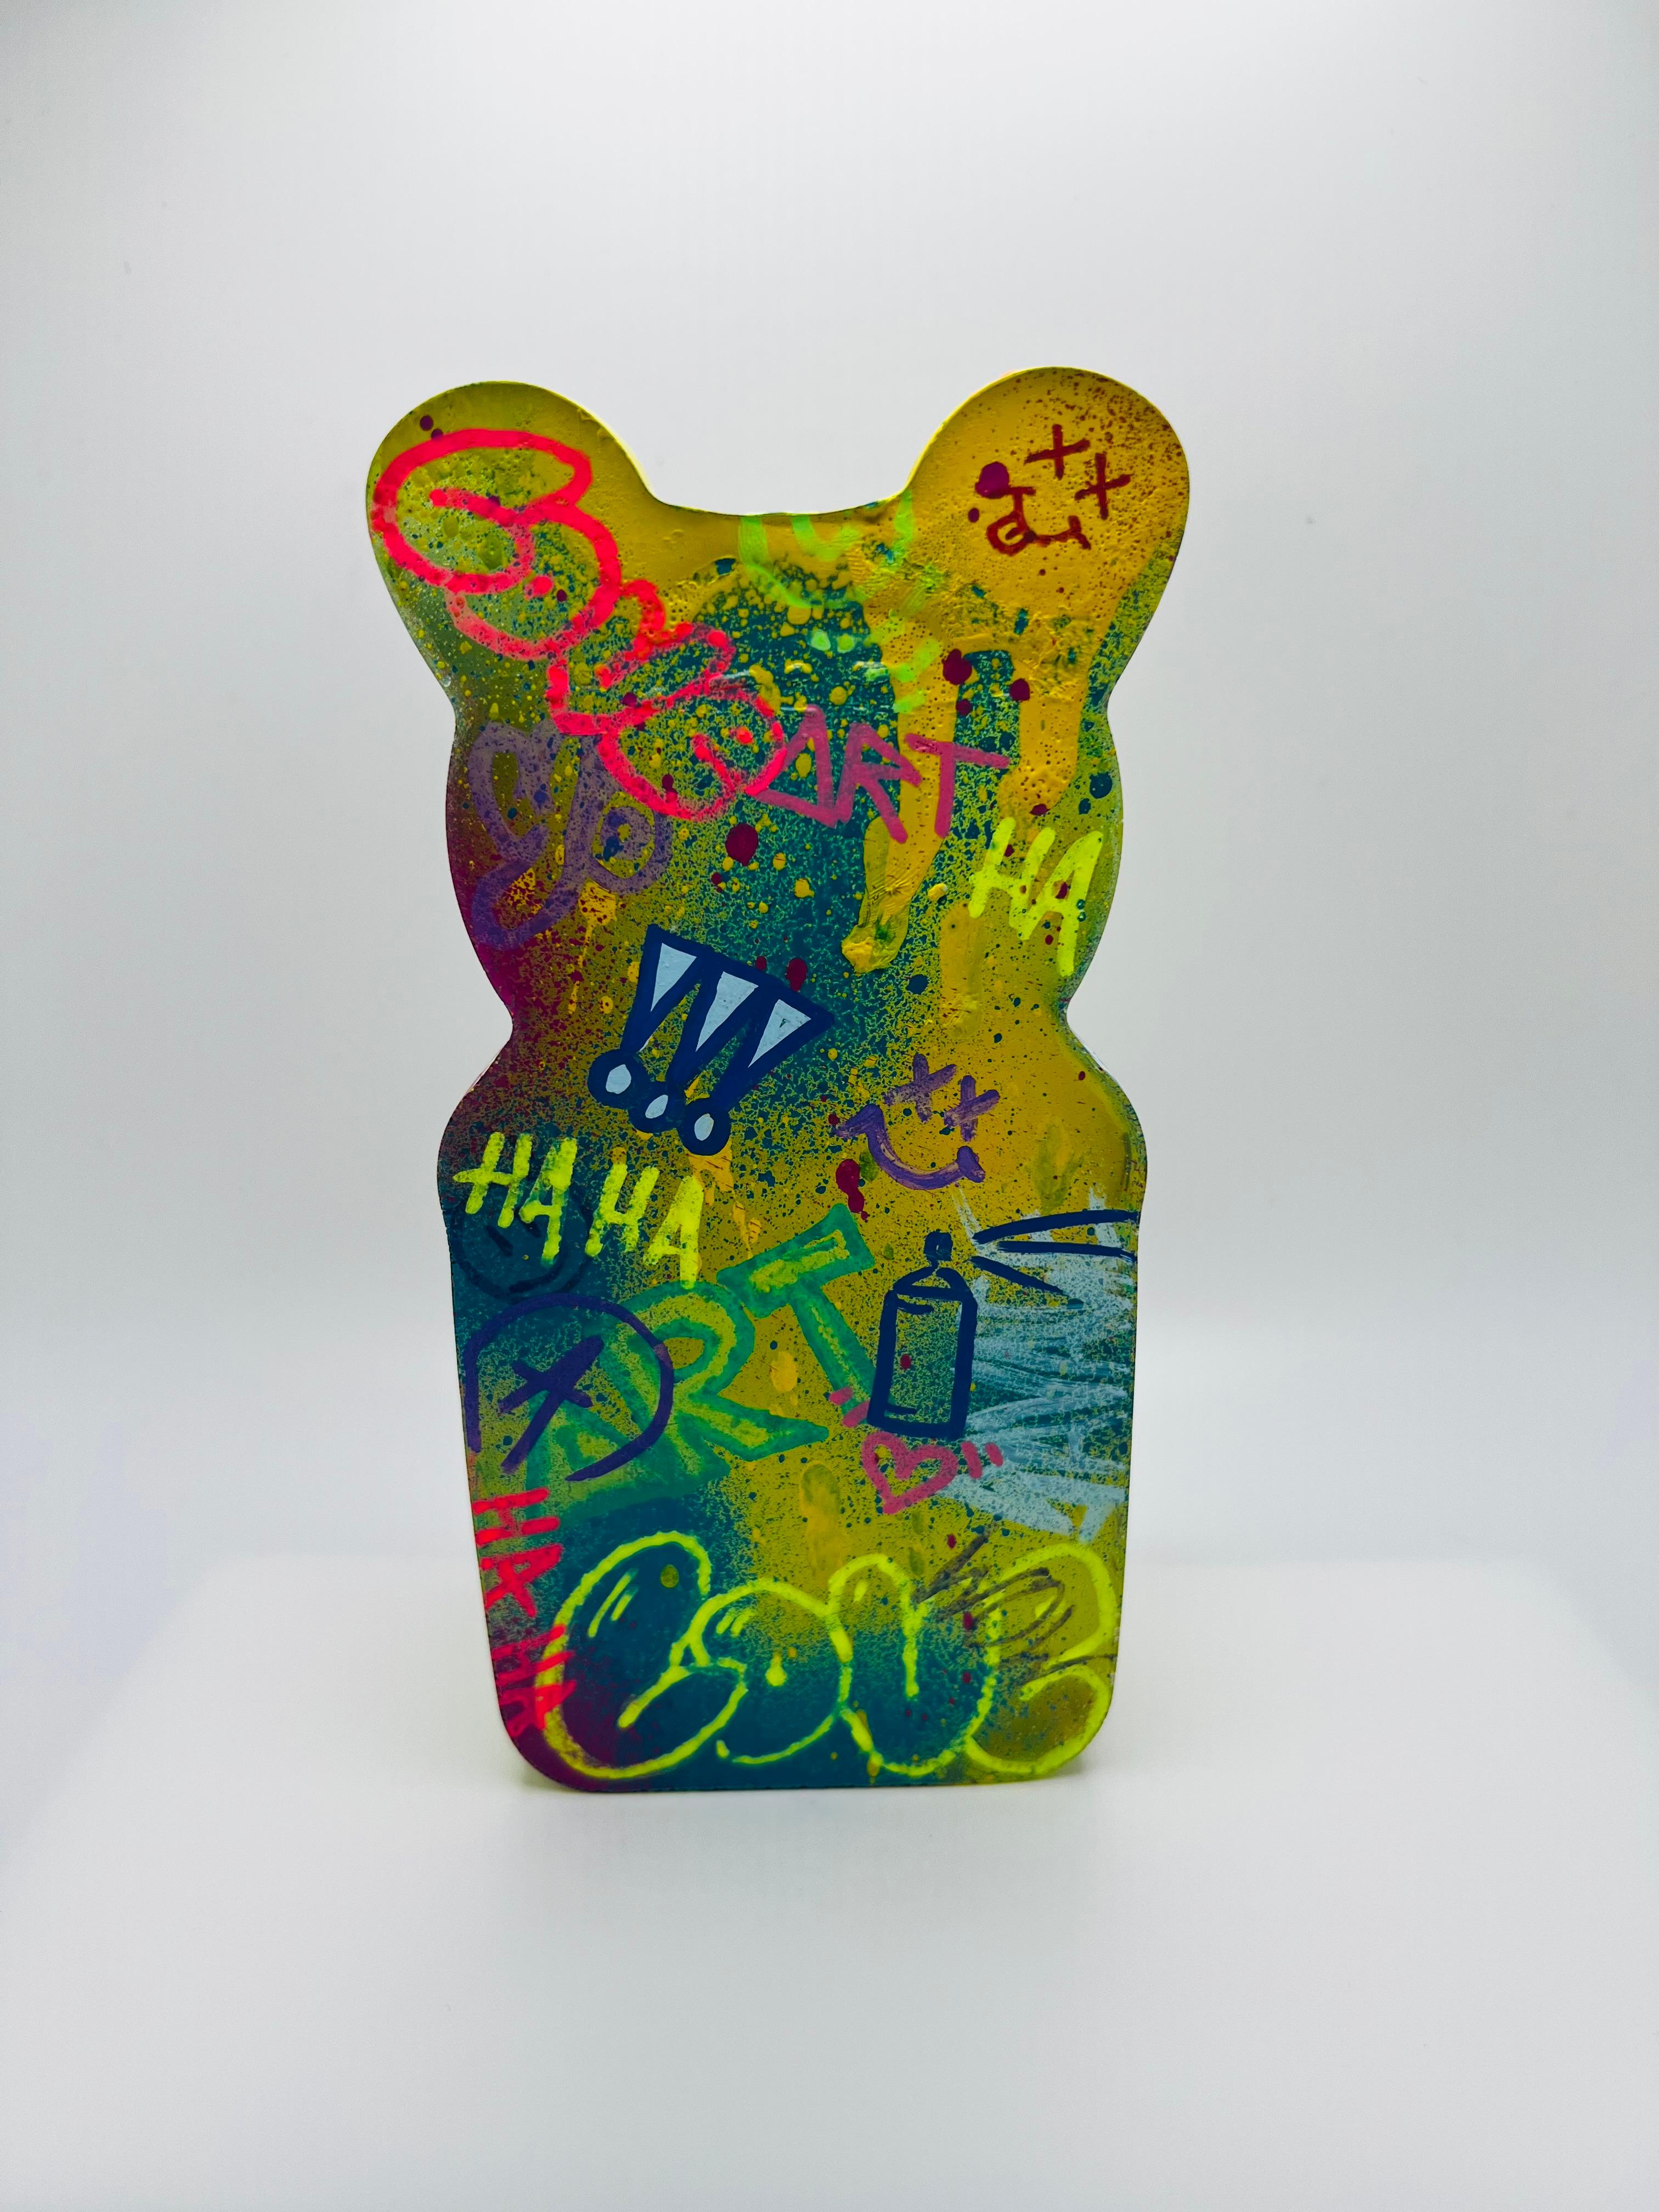 Graffiti Gummy bear 3, street art, pop art, colorful, contemporary, sculpture - Contemporary Mixed Media Art by Sahara Novotny